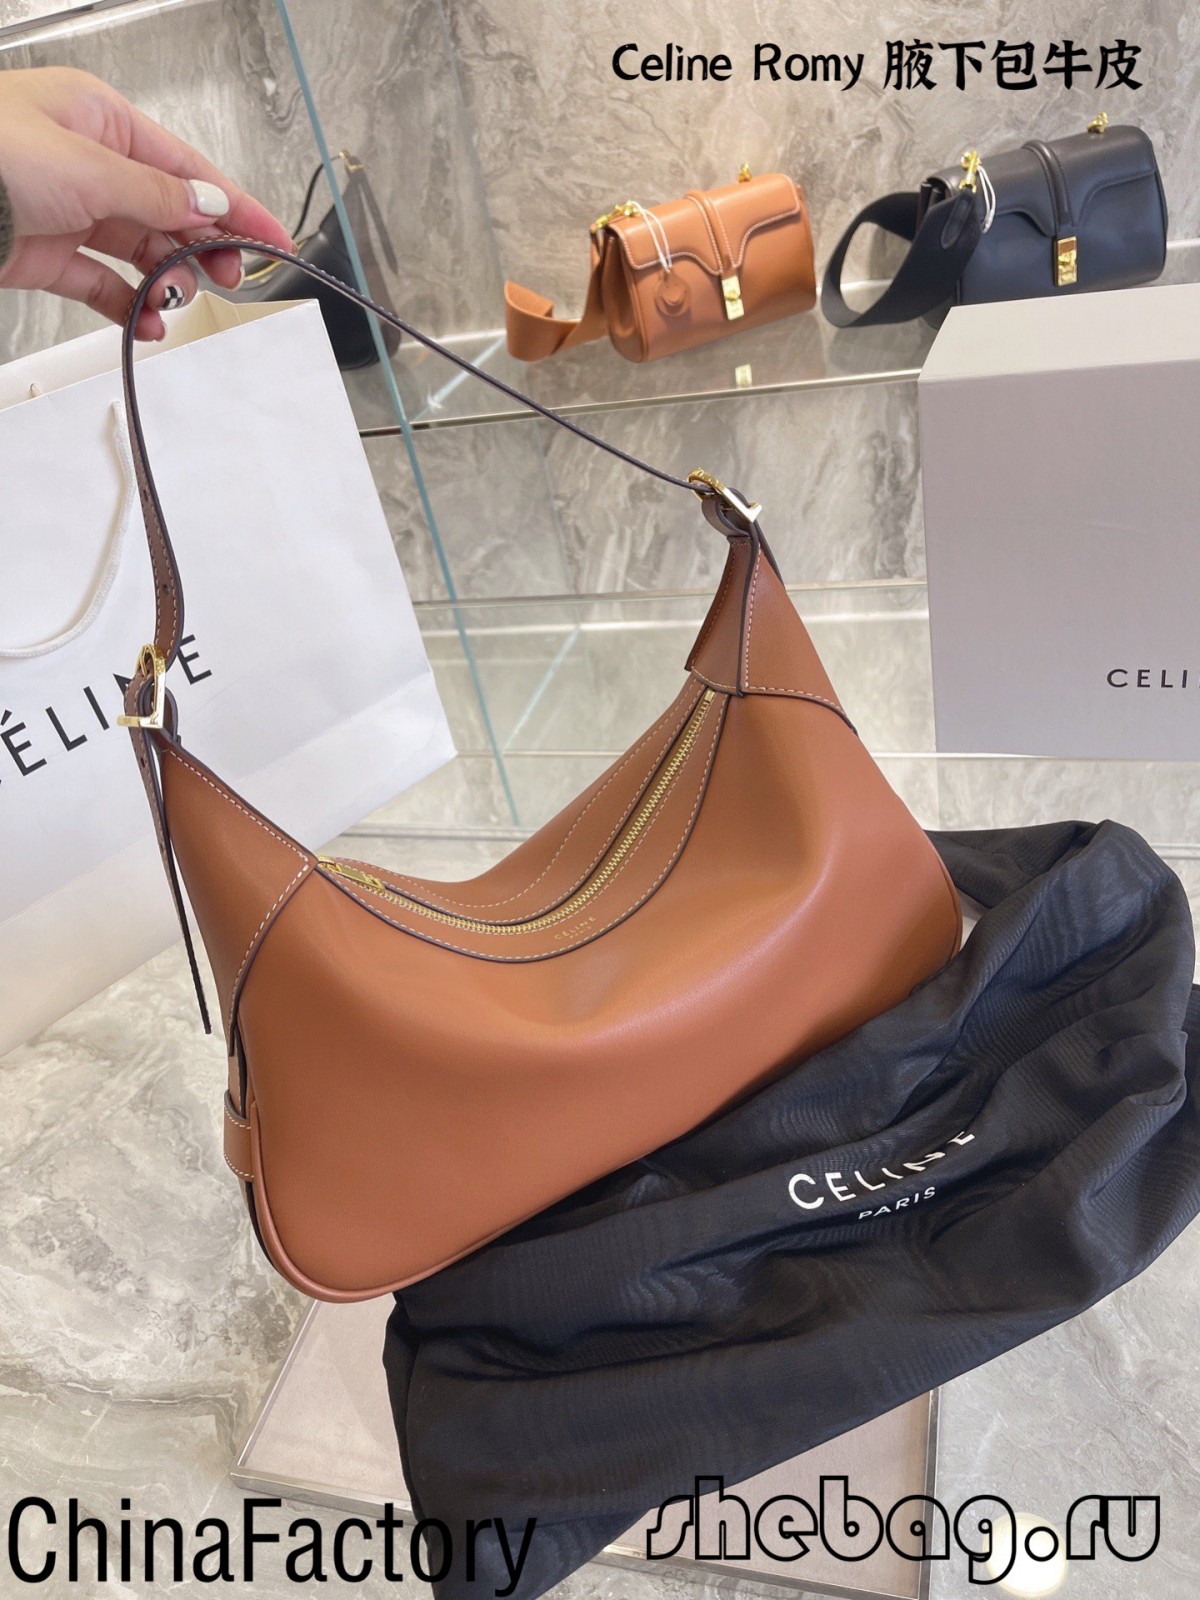 Parhaat replica celine -laukkuarvostelut: Celine Romy (2022 painos) - Paras laatu Fake Louis Vuitton Bag -verkkokauppa, Replica designer bag ru